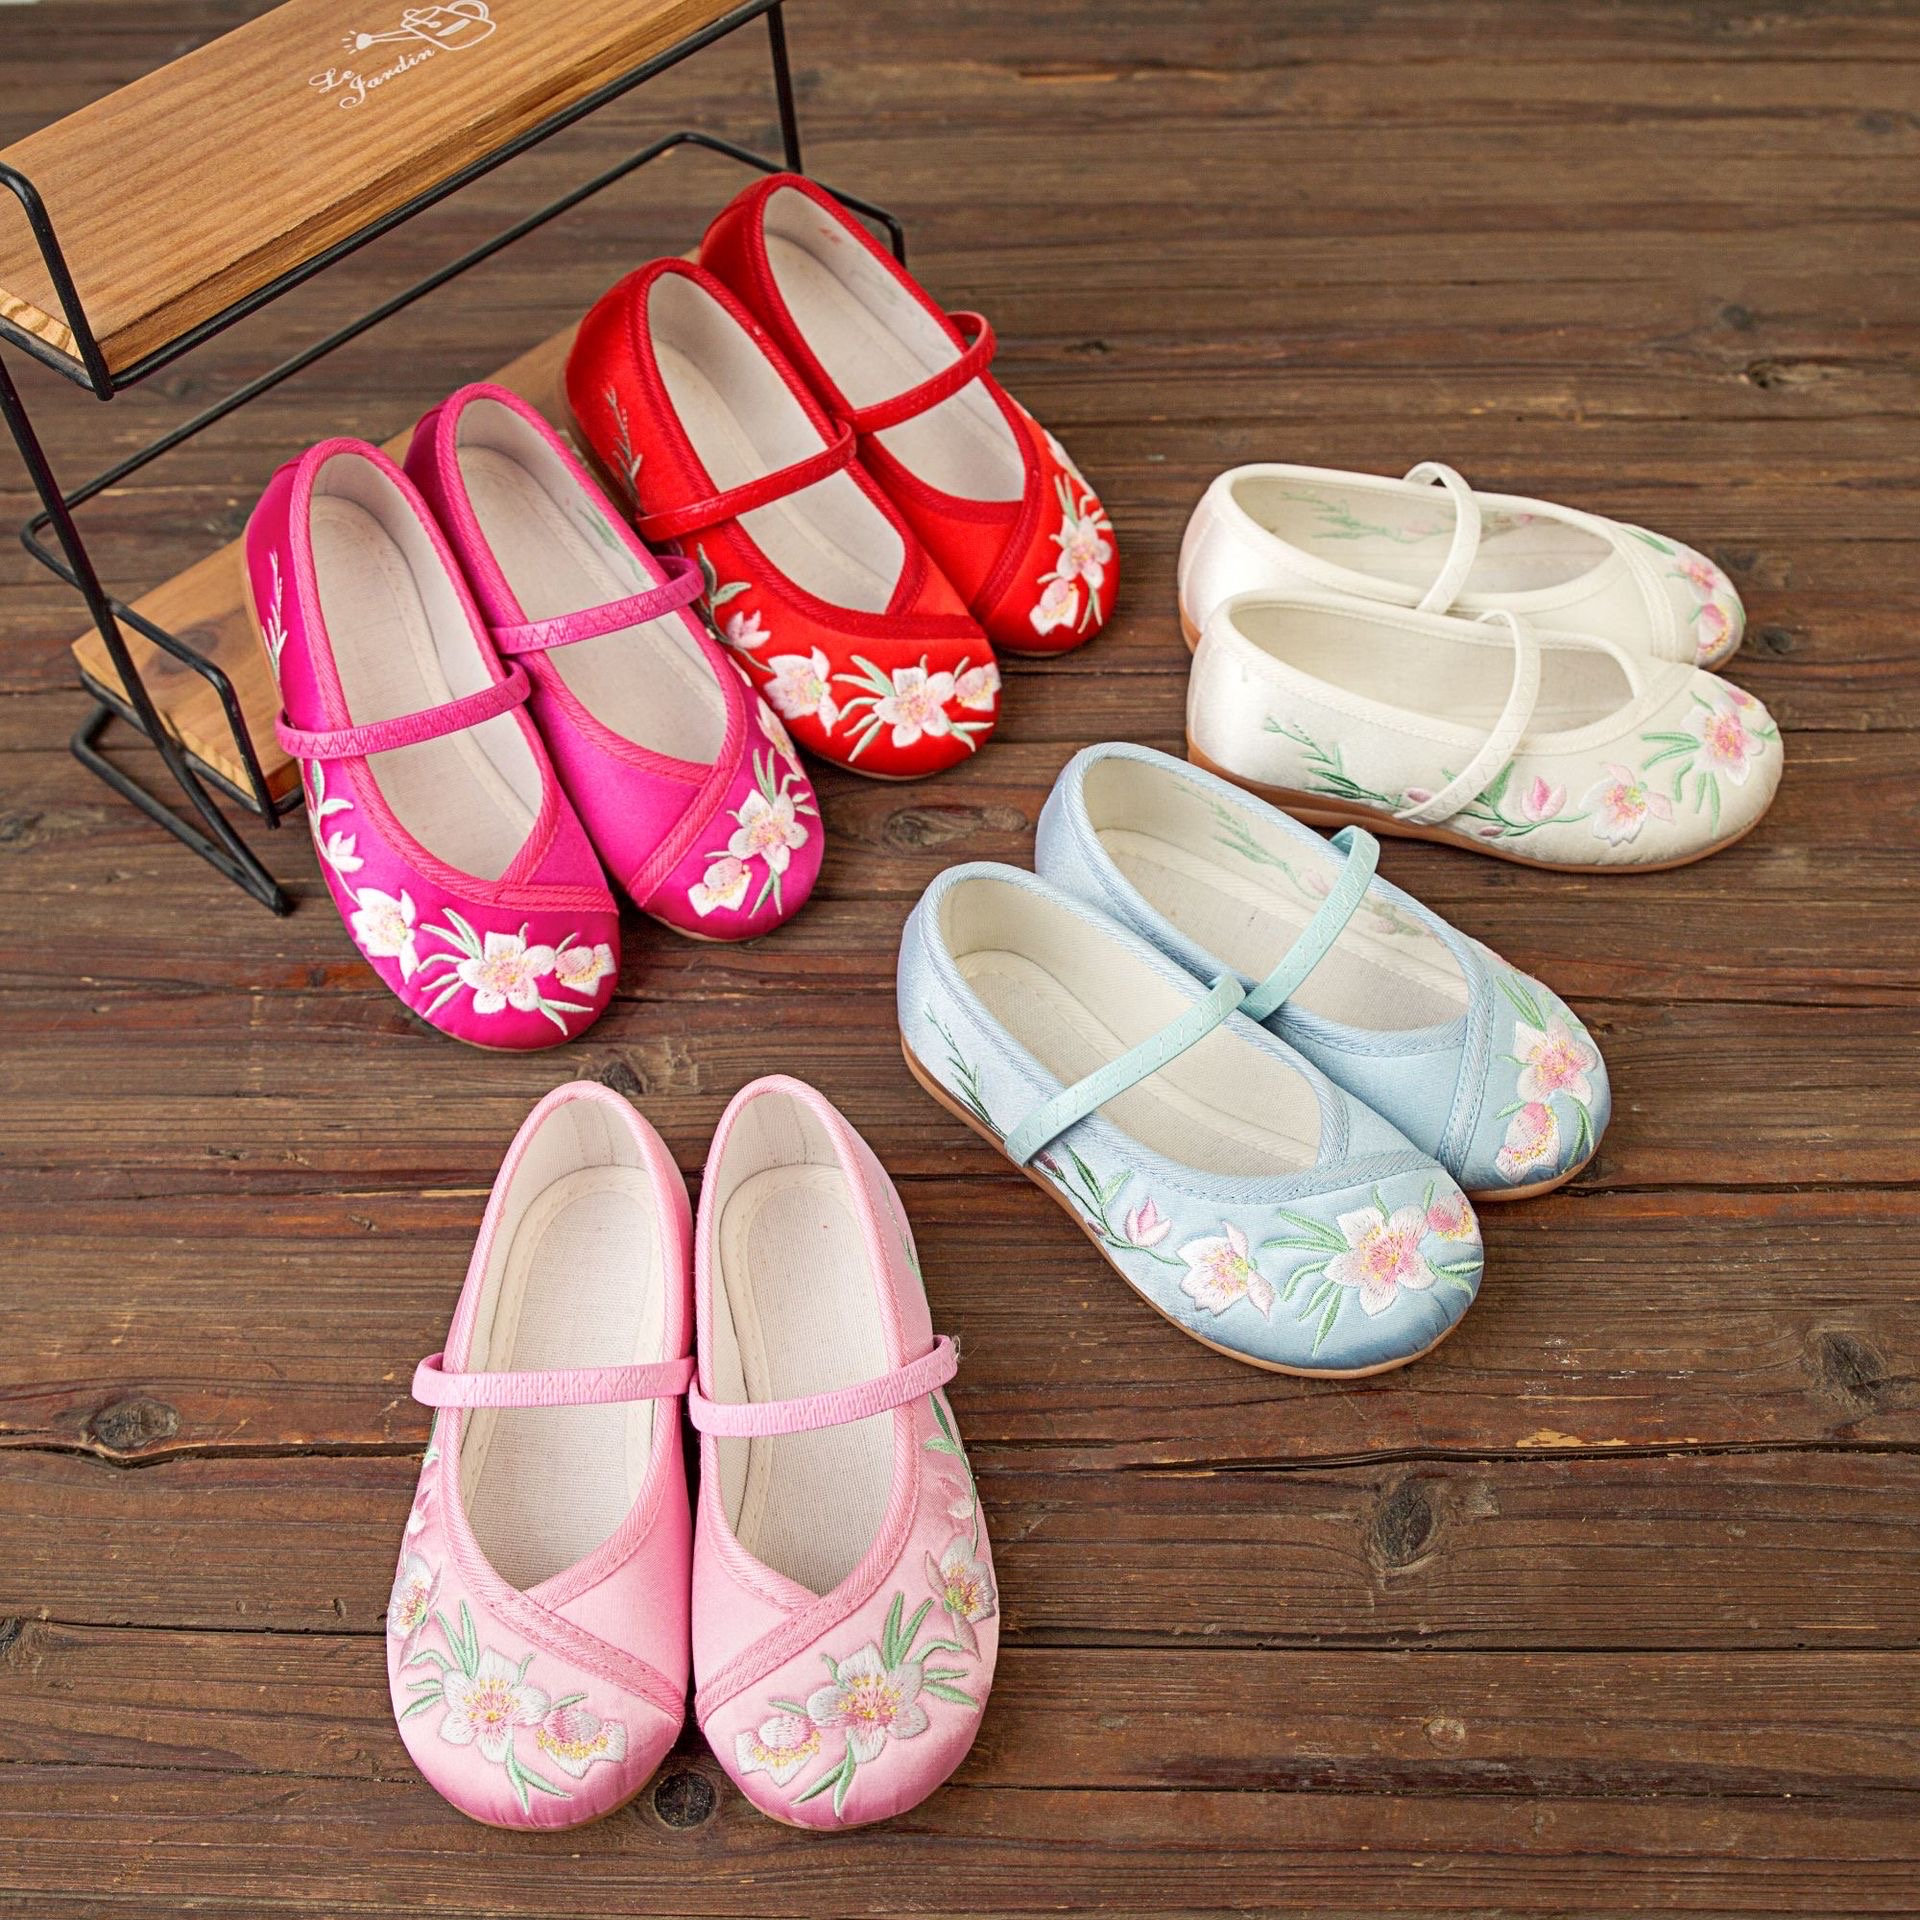 3D Asian Food Charms - Asian Shoe Charm - Ramen Shoe Clips - Dumpling Shoe  Charm - Shoe Charms for kids - Stocking stuffer - Kawaii Charms